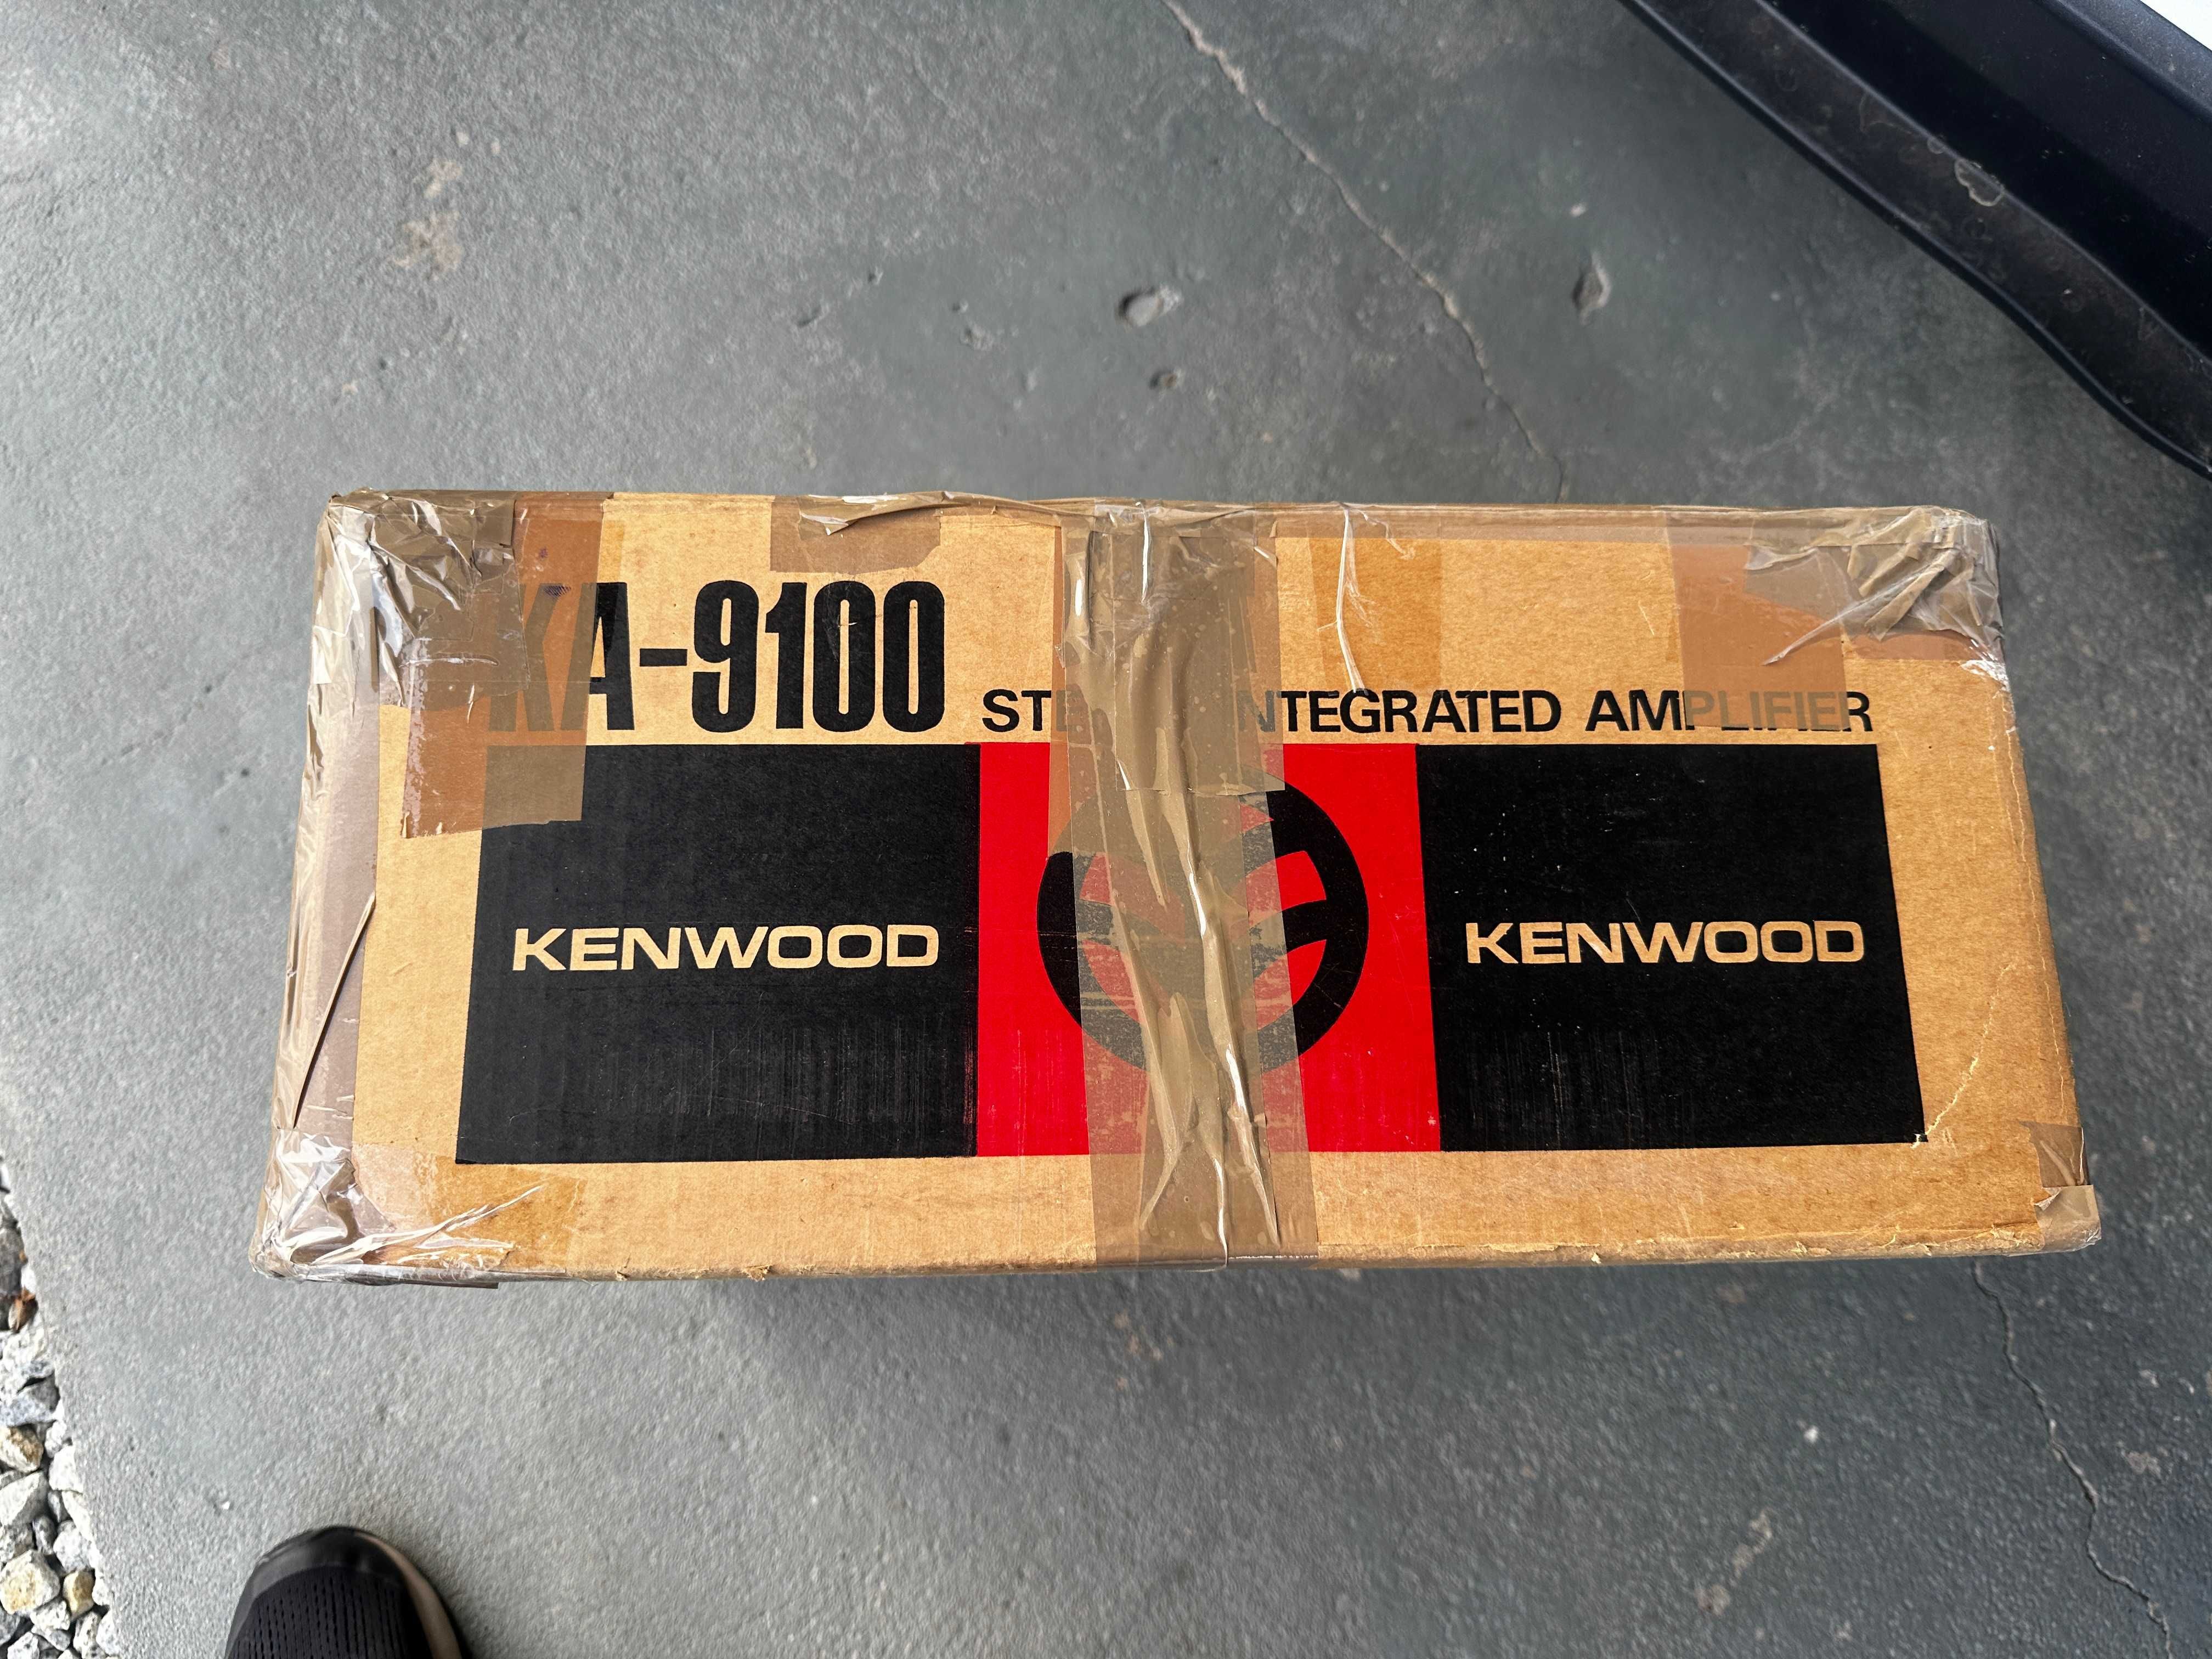 KENWOOD KA-9100 Oryginalny karton opakowanie